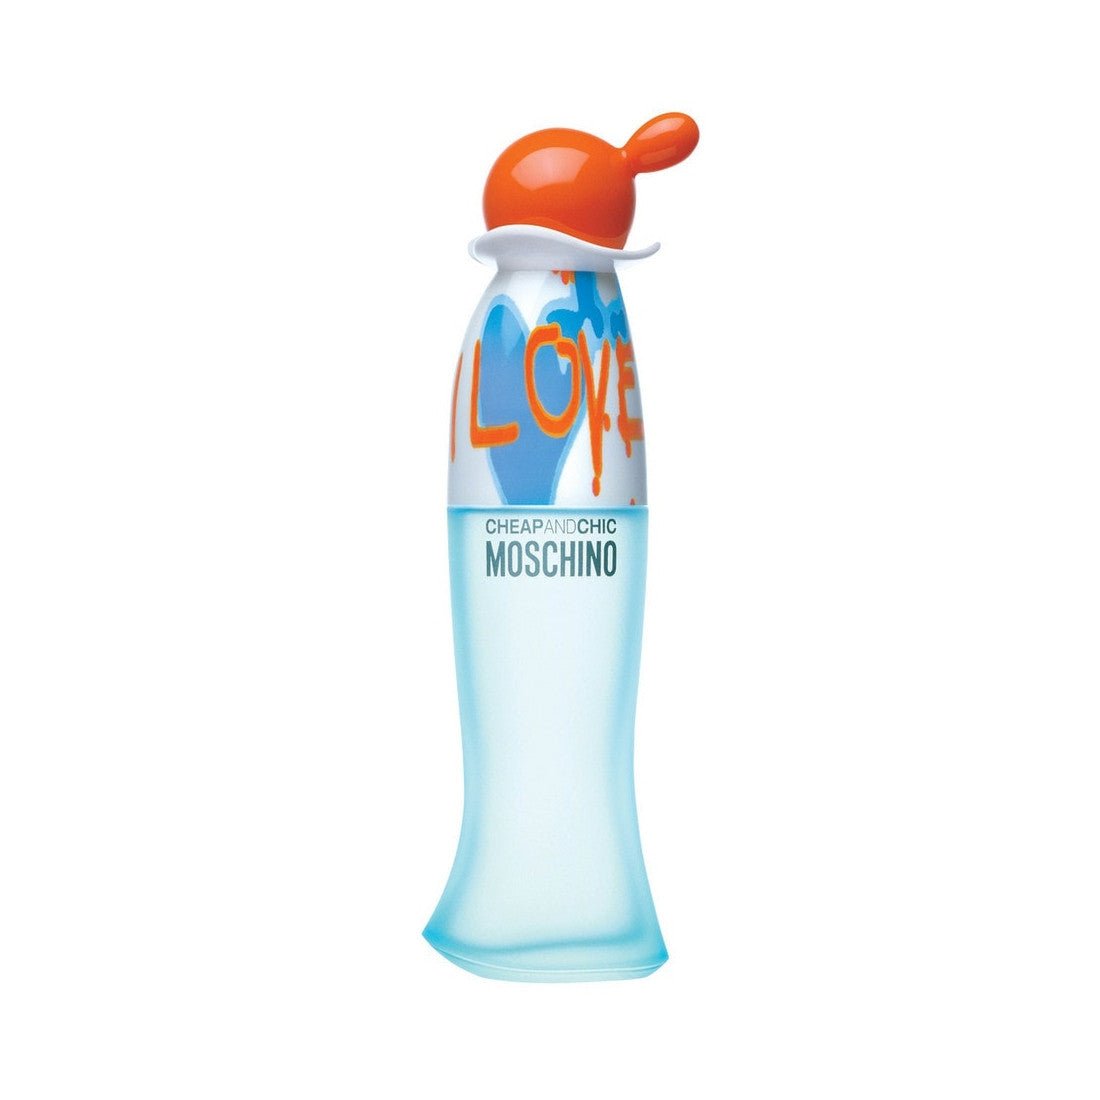 Moschino Cheap And Chic I Love Love Eau De Toilette Spray Refillable Atomiser 10ml - LookincredibleMoschino8011003991457